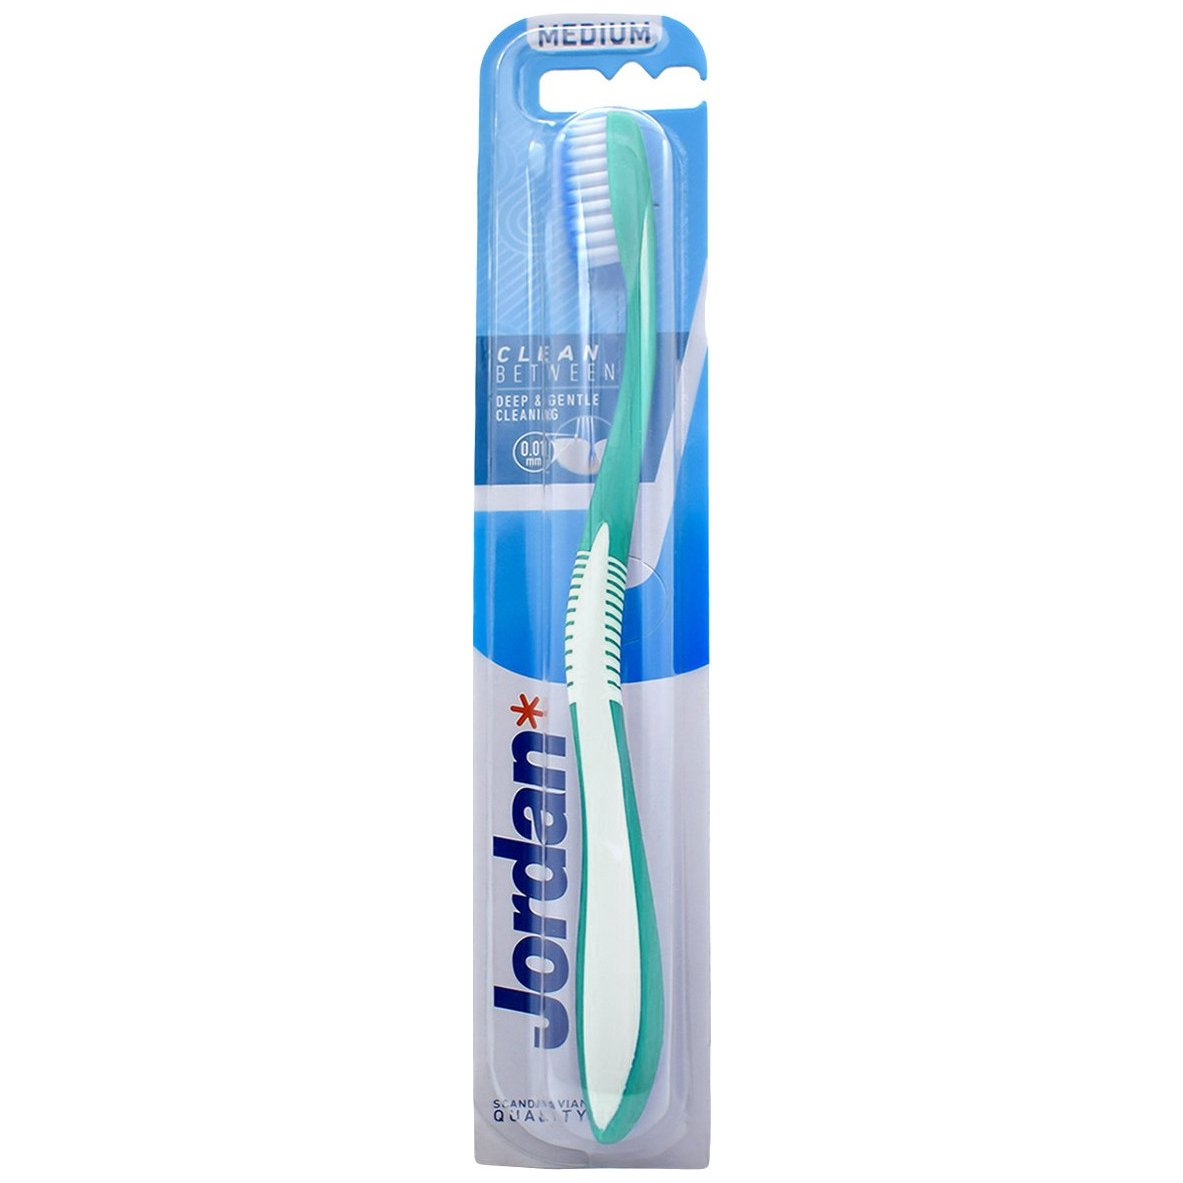 Jordan Clean Between Toothbrush Medium 0.01mm Μέτρια Οδοντόβουρτσα για Βαθύ Καθαρισμό με Εξαιρετικά Λεπτές Ίνες 1 Τεμάχιο, Κωδ 310035 – Τιρκουάζ